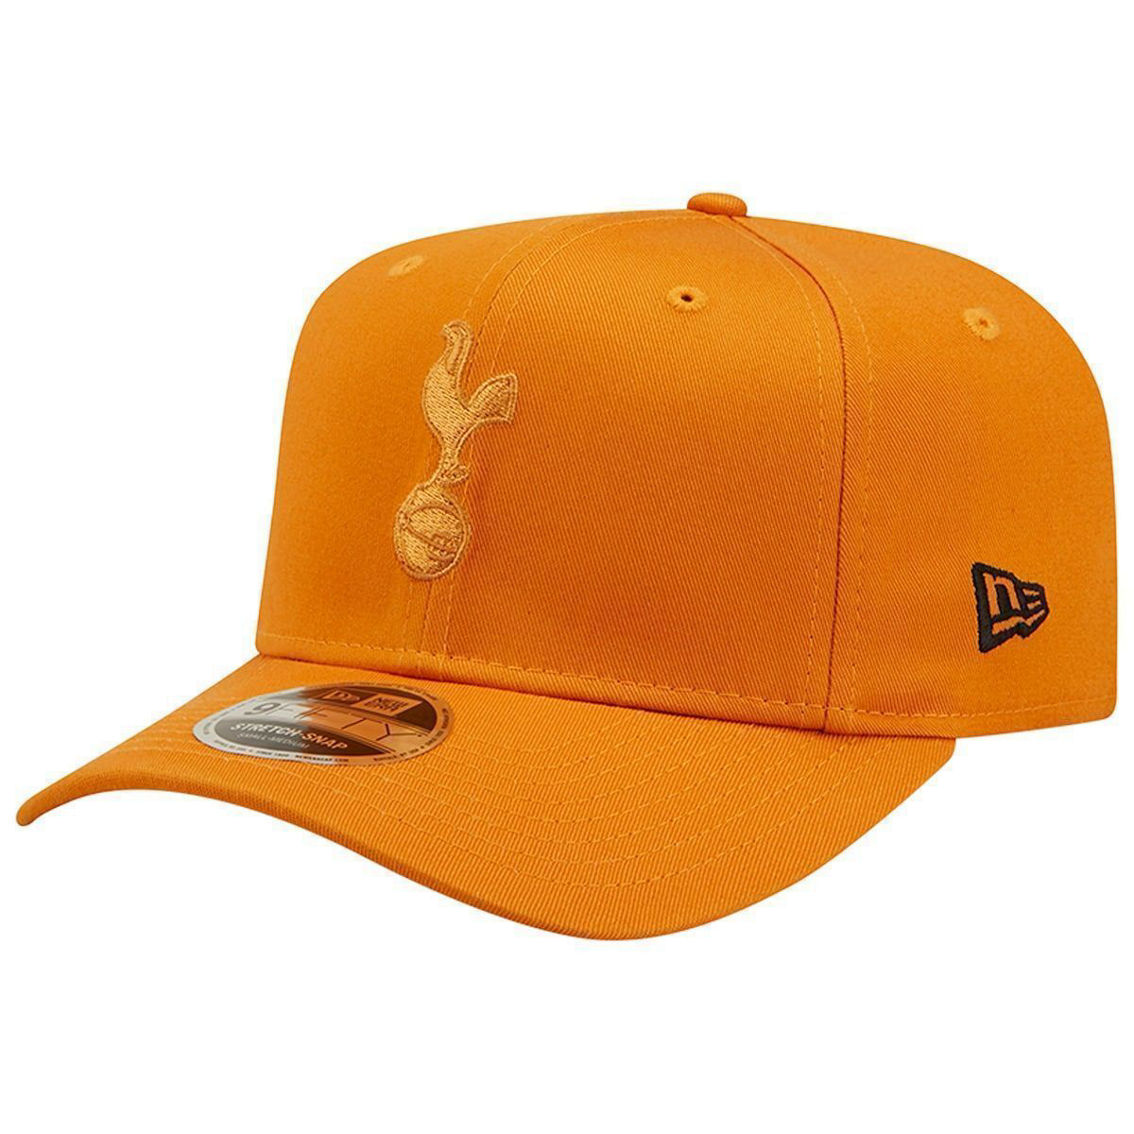 New Era Men's Orange Tottenham Hotspur Seasonal 9FIFTY Snapback Hat - Image 2 of 4